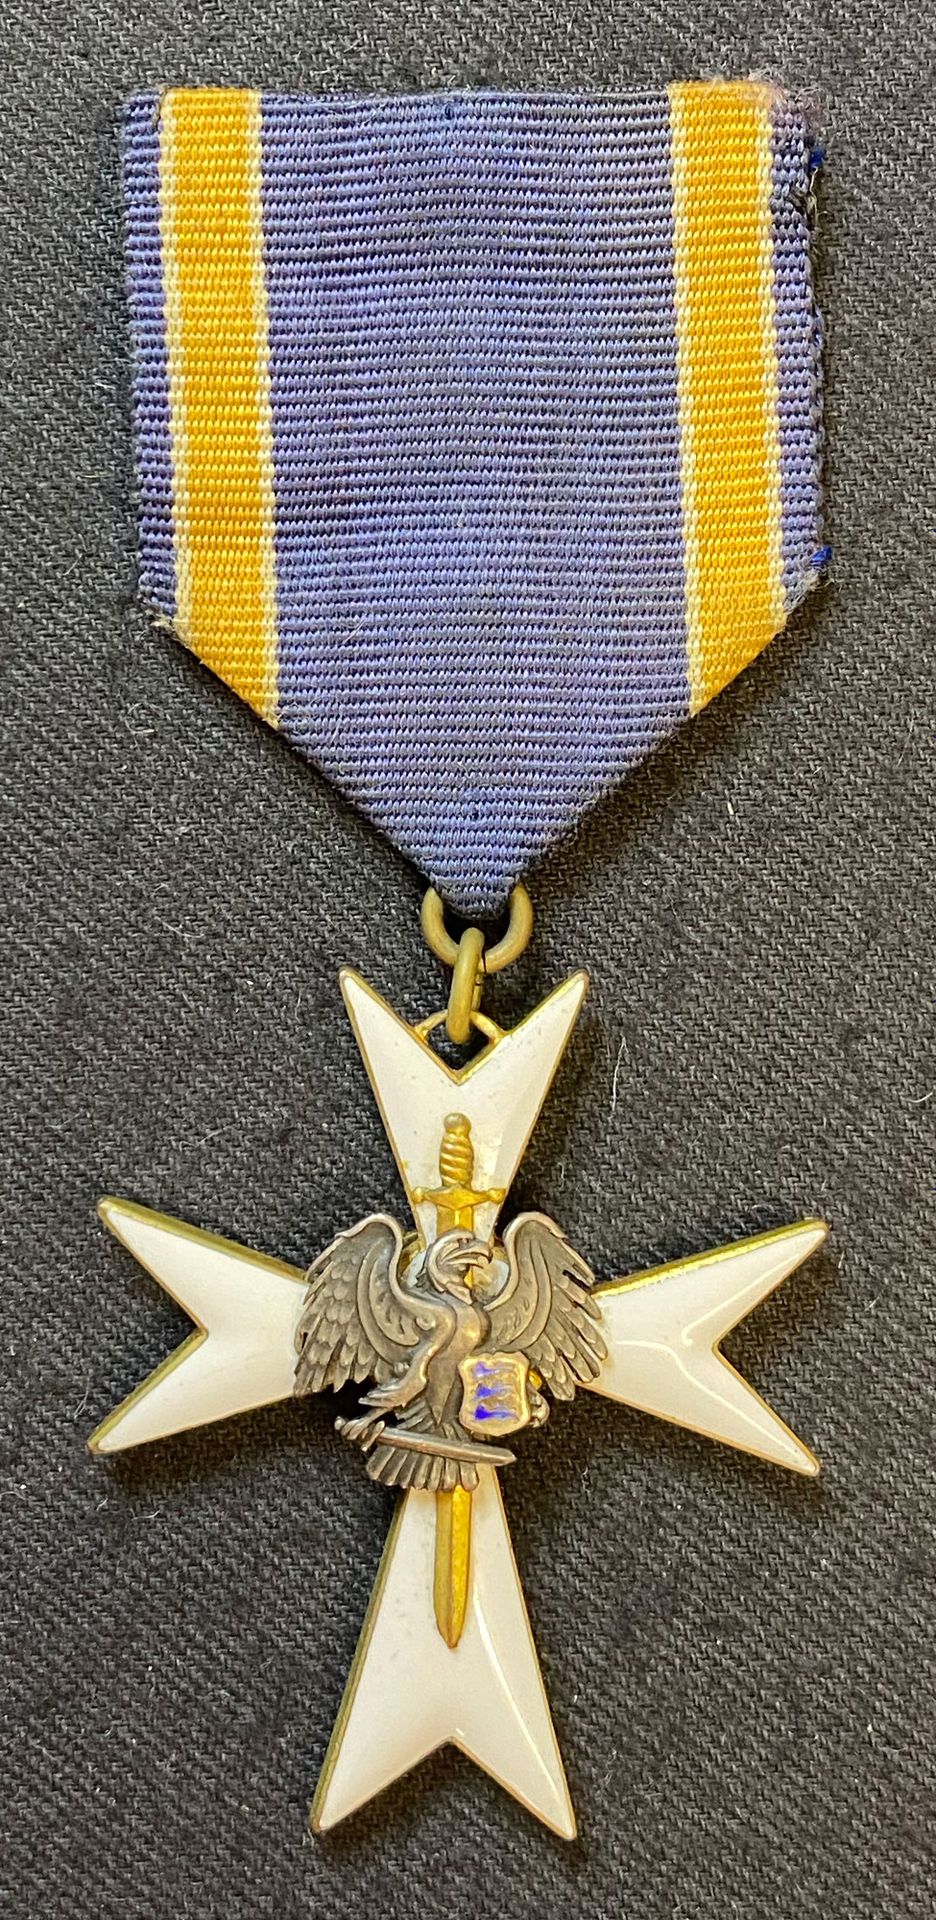 Null 爱沙尼亚 - 国民警卫队白十字勋章，创建于1929年，鎏金青铜、银和珐琅的三级十字勋章，绶带。
45 x 38 mm
法国，战时时期。
TTB